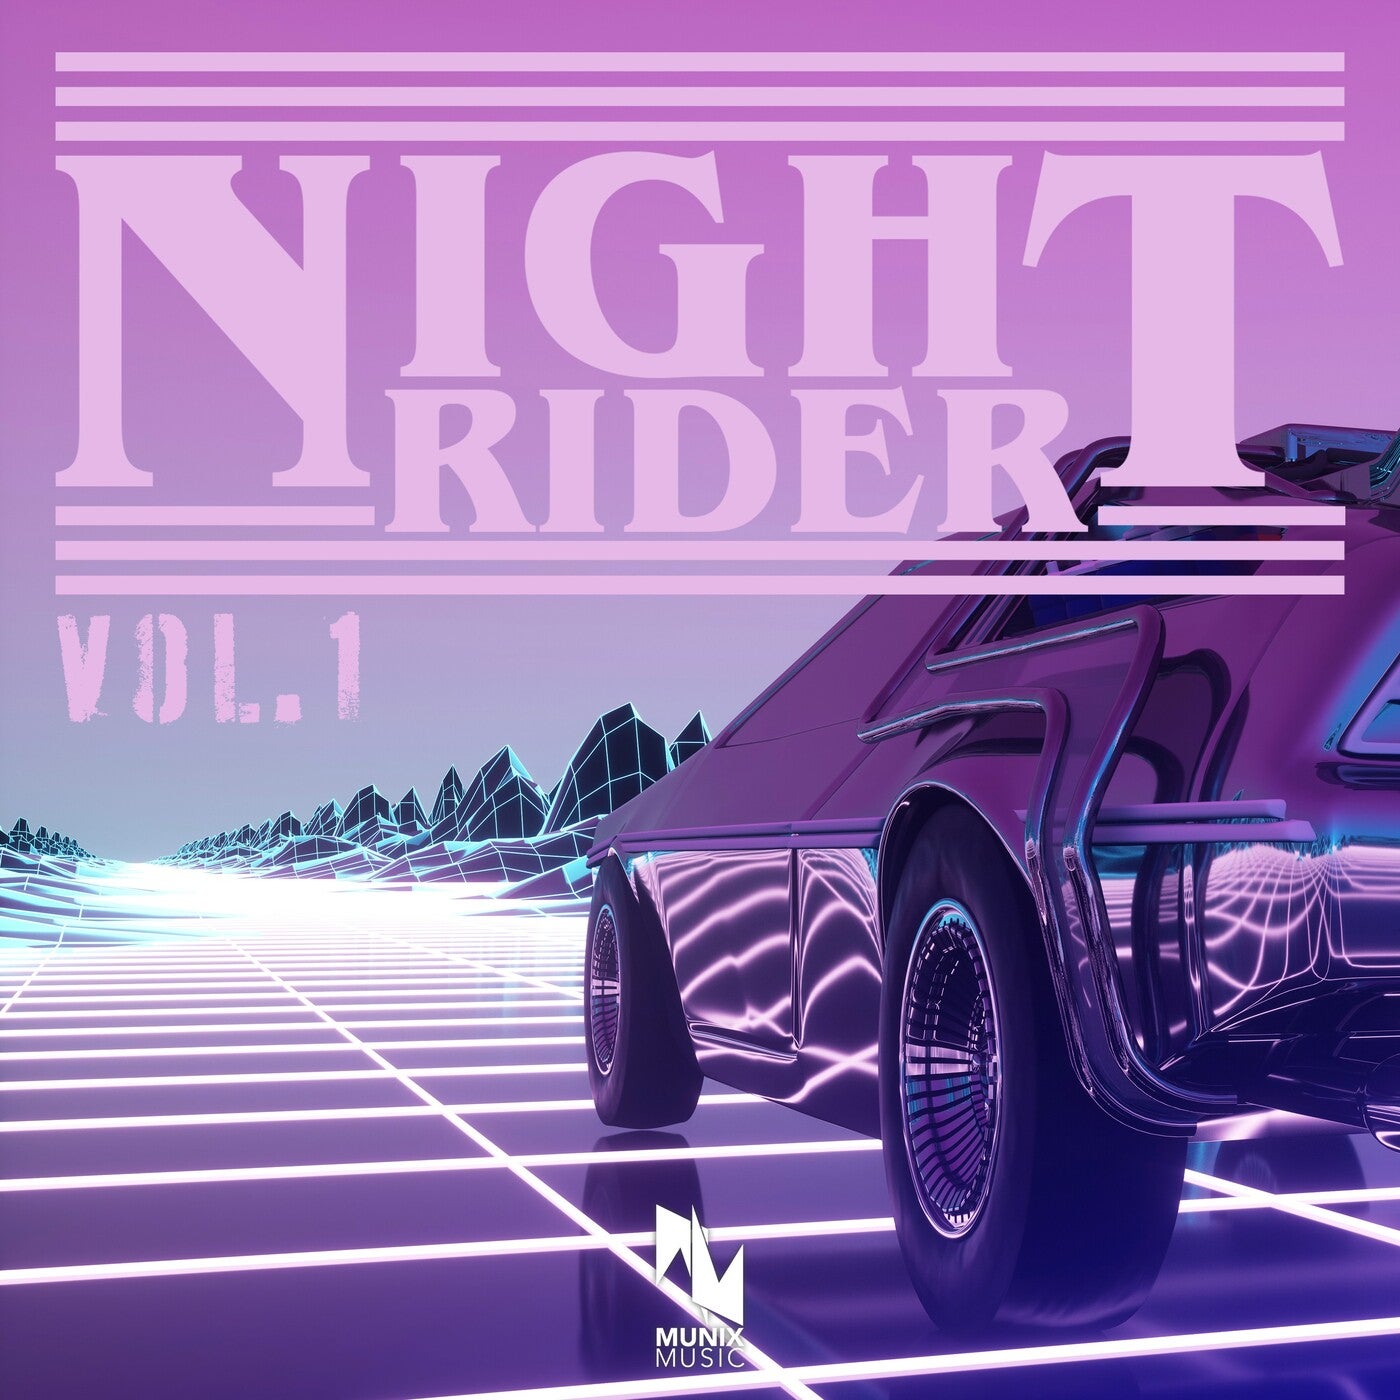 Nightrider, Vol. 1